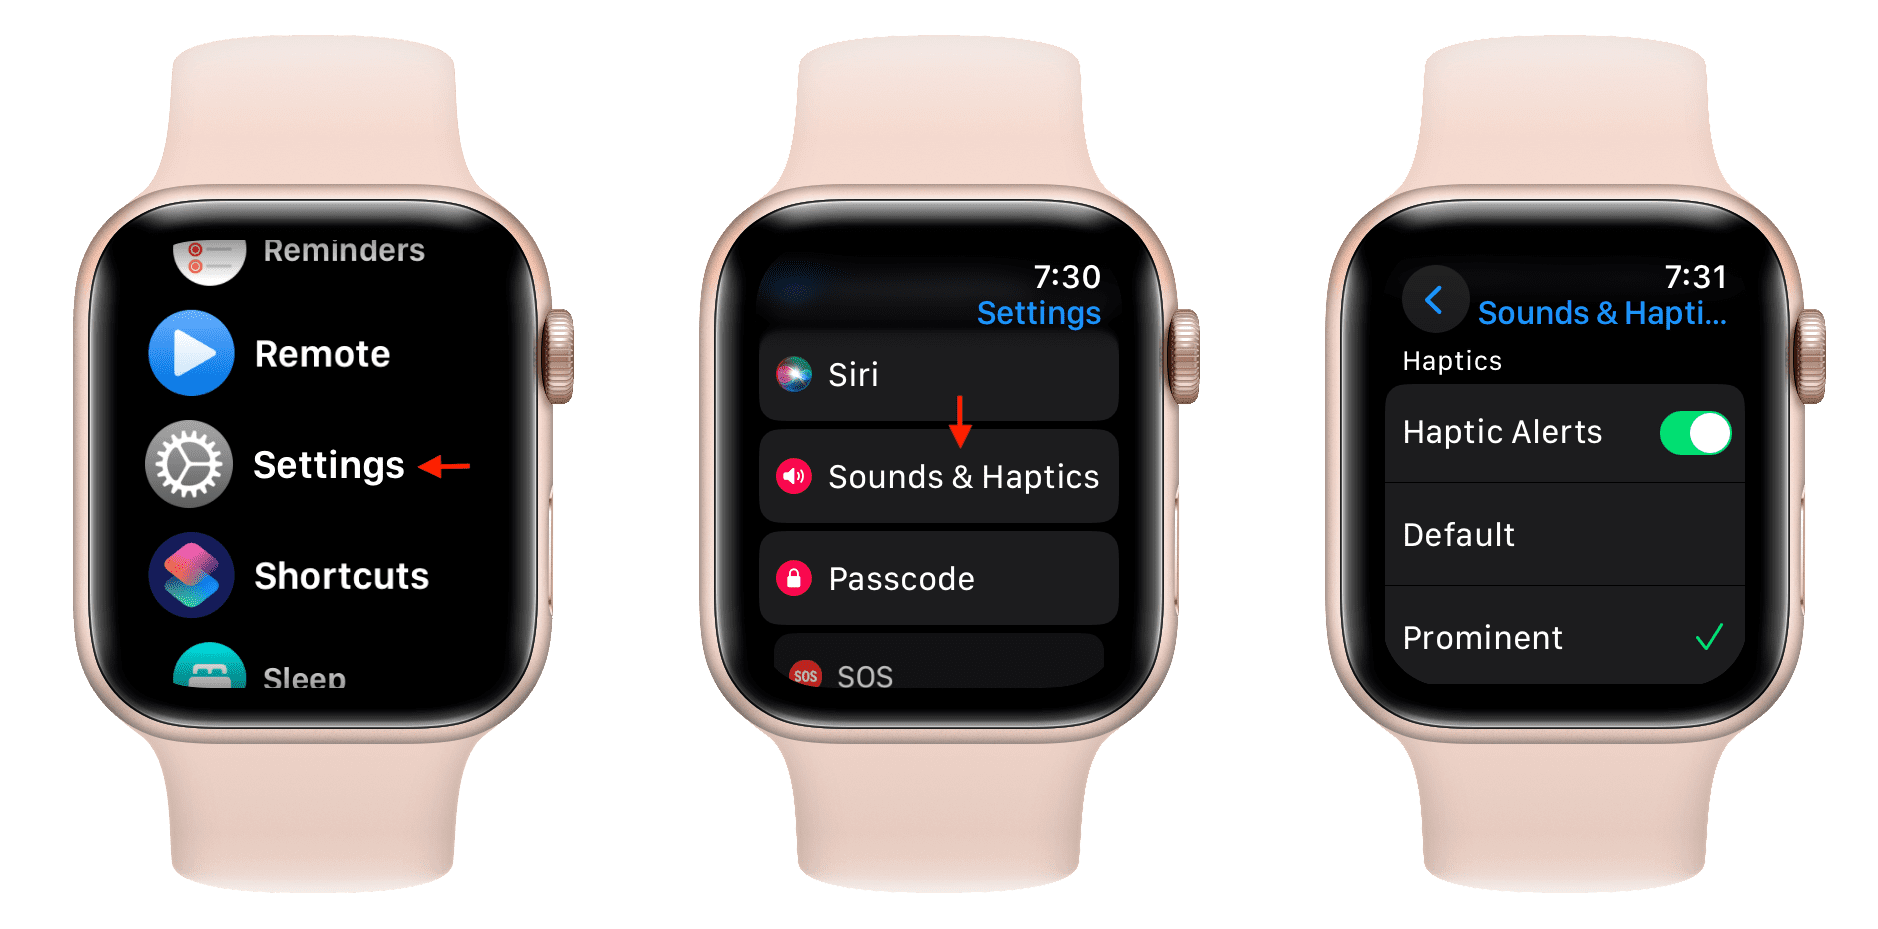 Haptics settings on Apple Watch